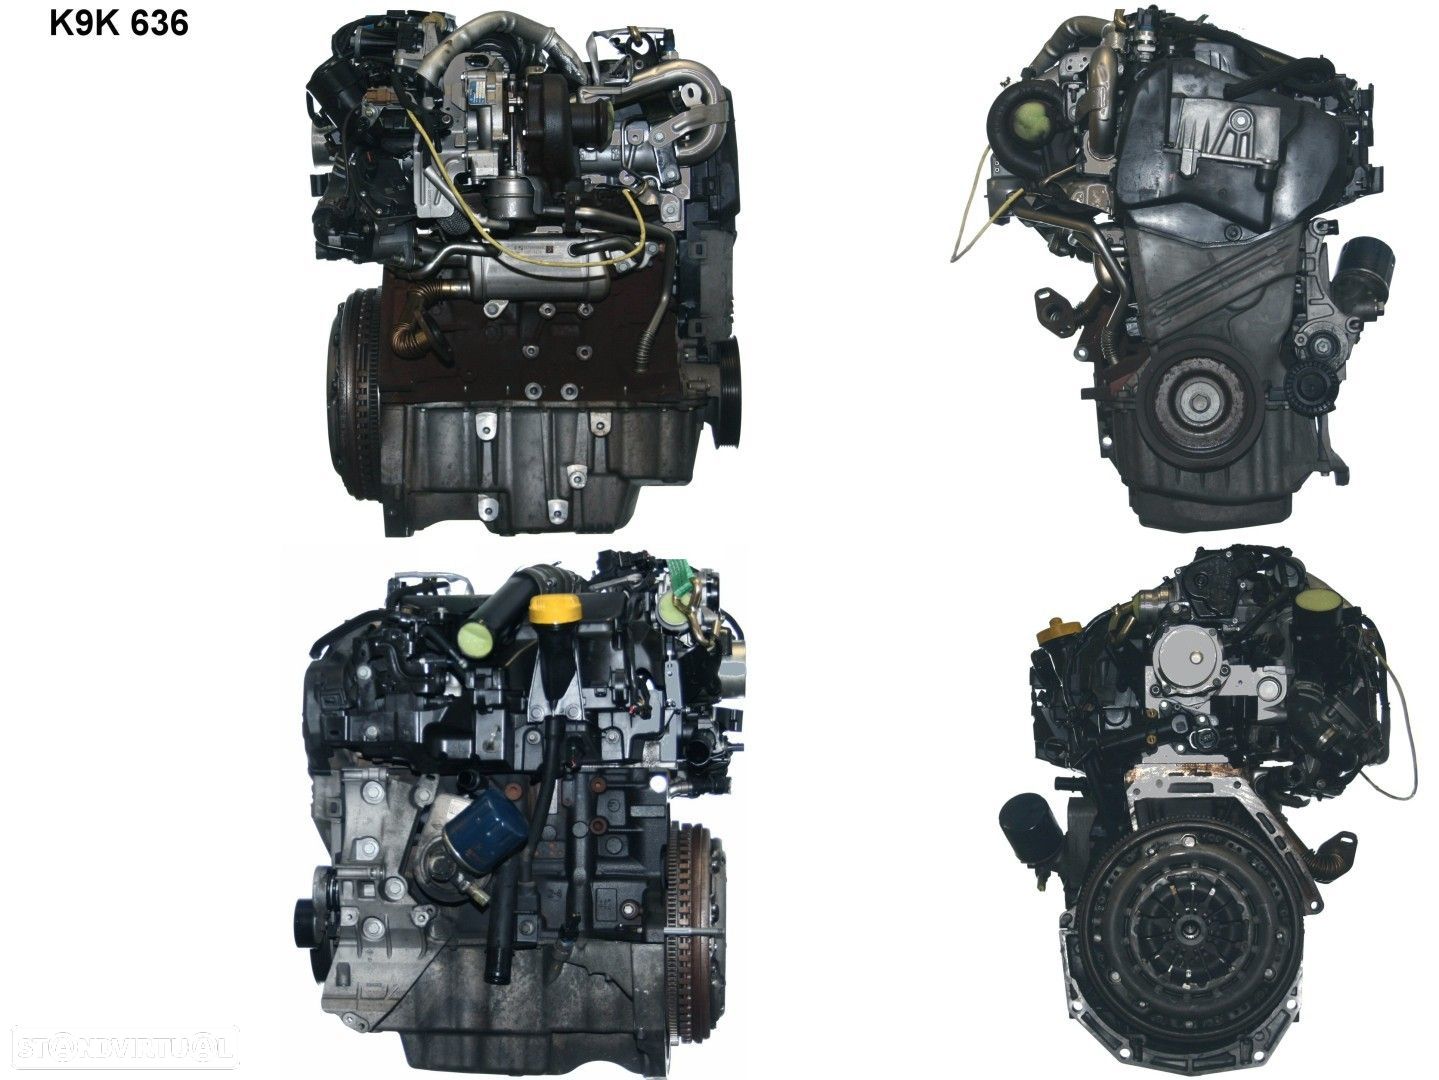 Motor Completo  Usado NISSAN QASHQAI 1.5 dCi K9K 636 - 1